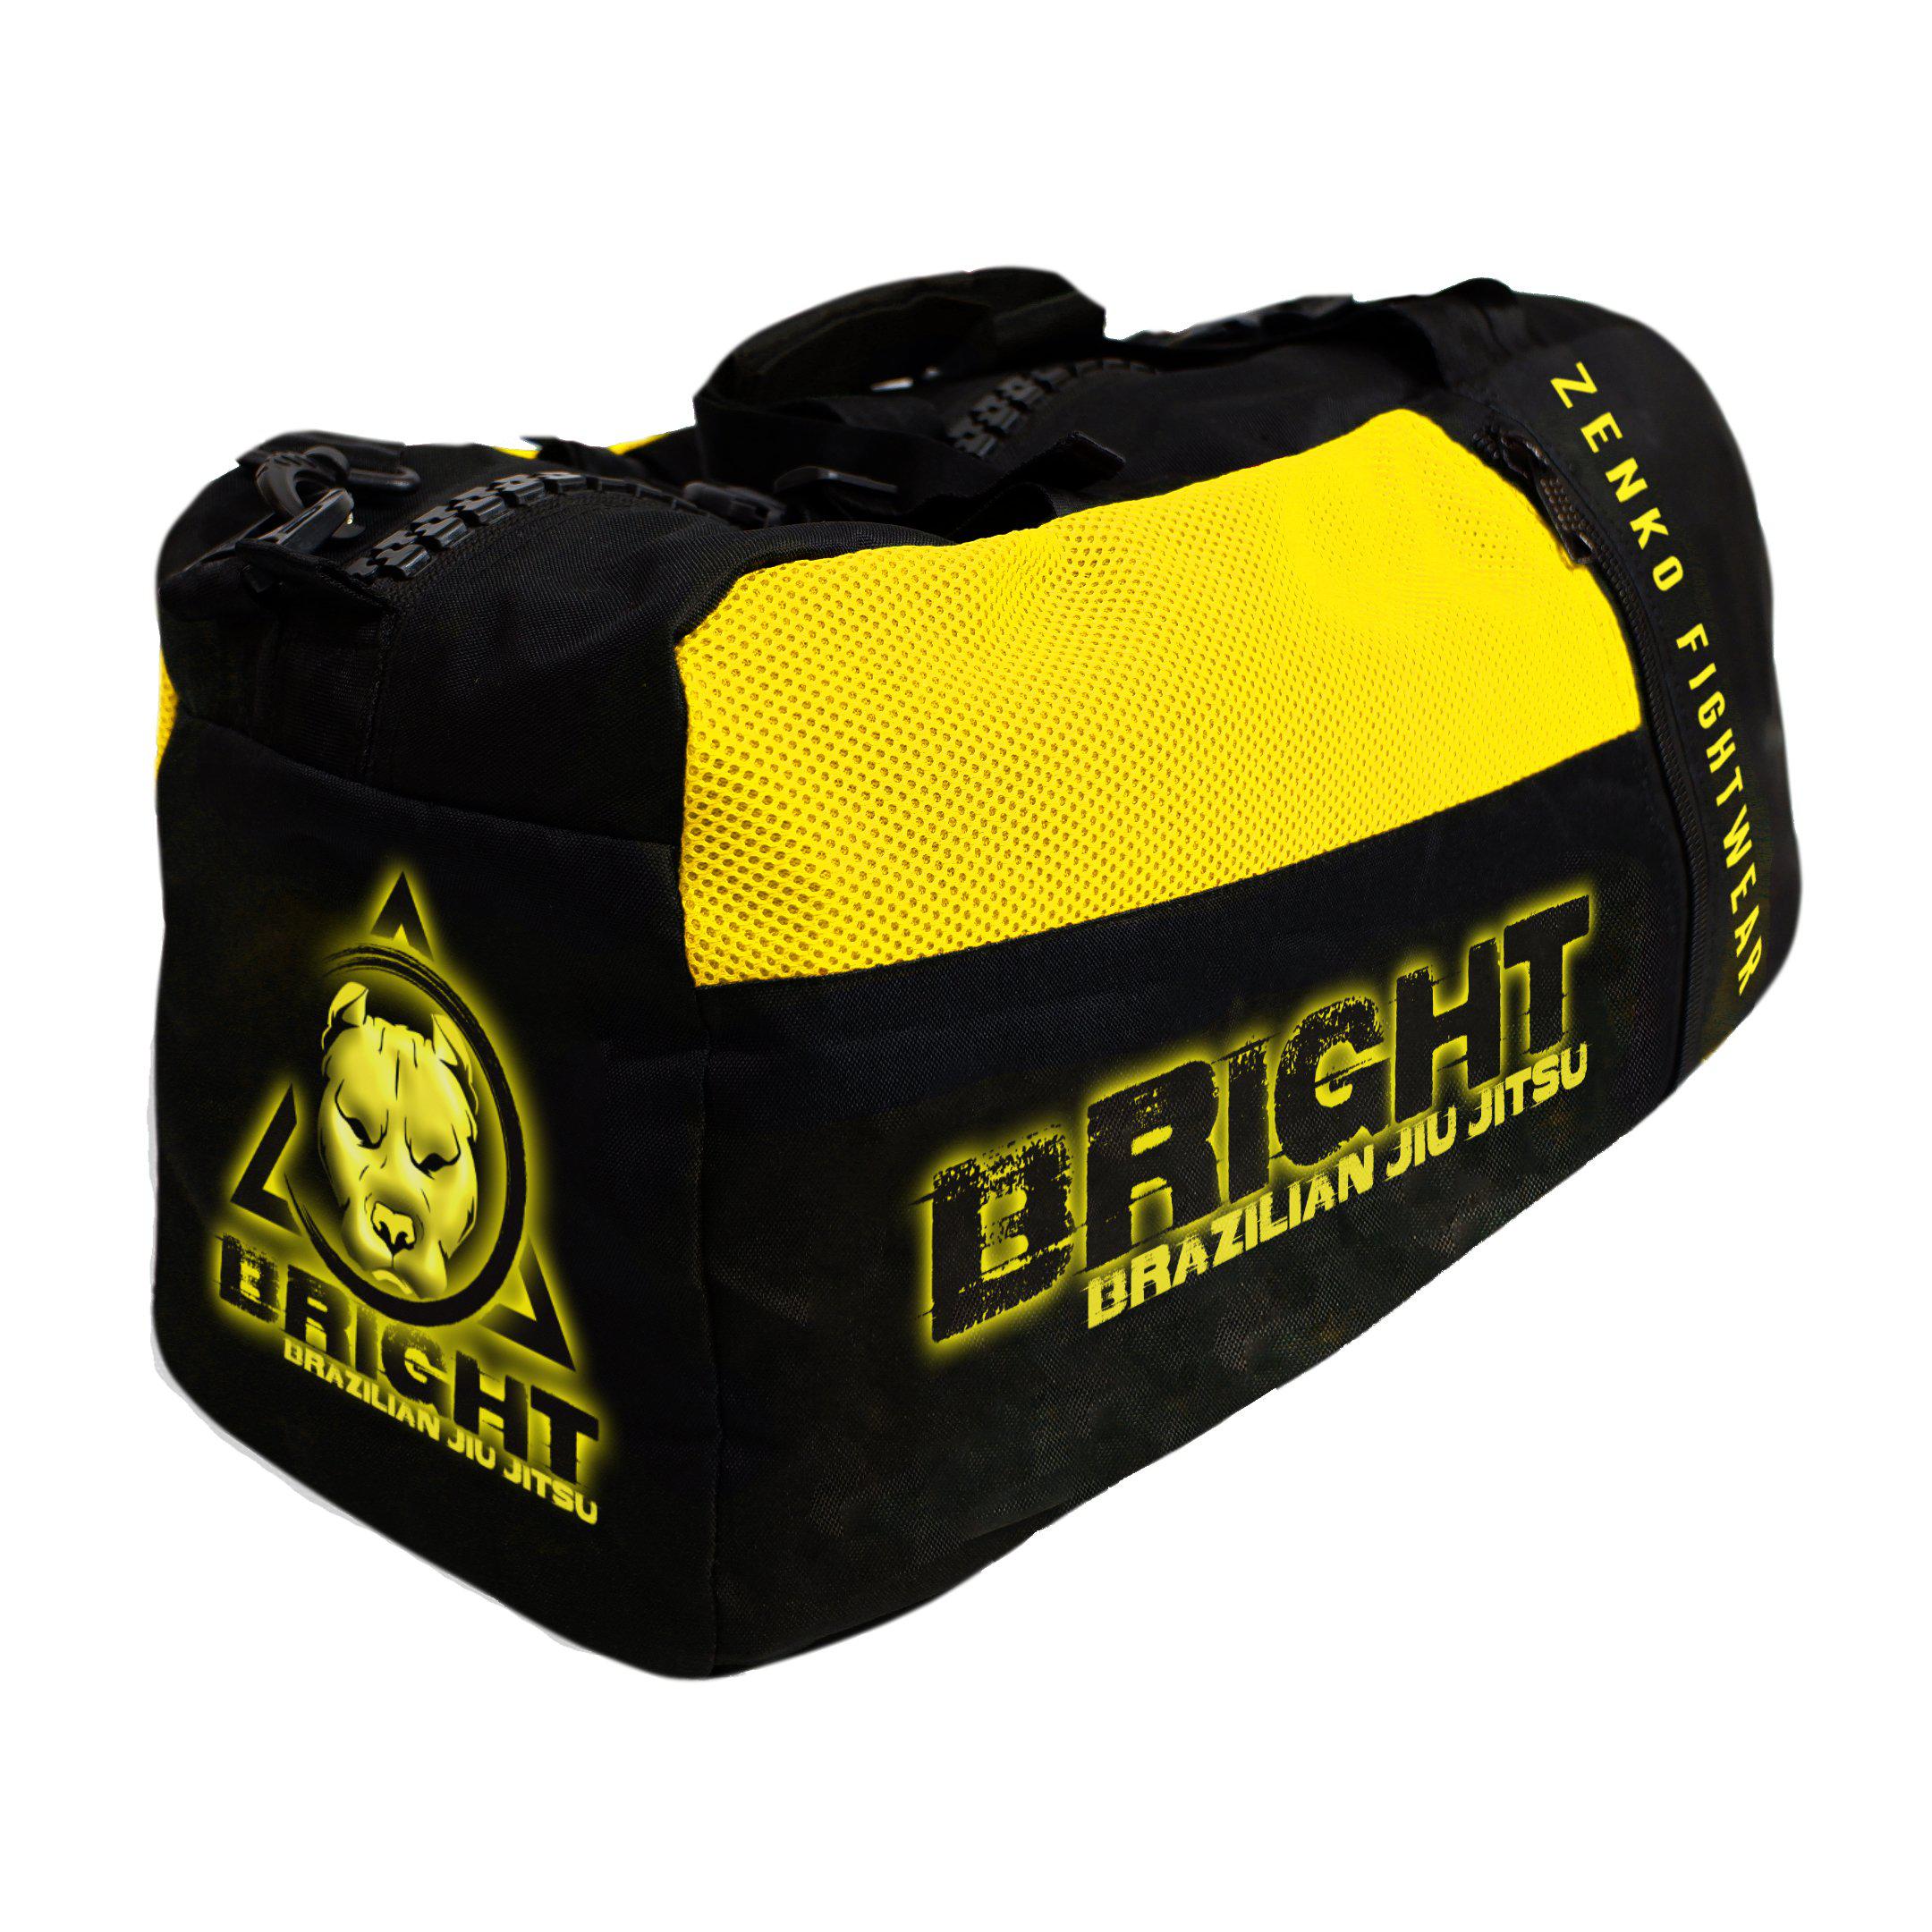 Bright Brazilian Jiu Jitsu Gear Bag - Zenko Fightwear